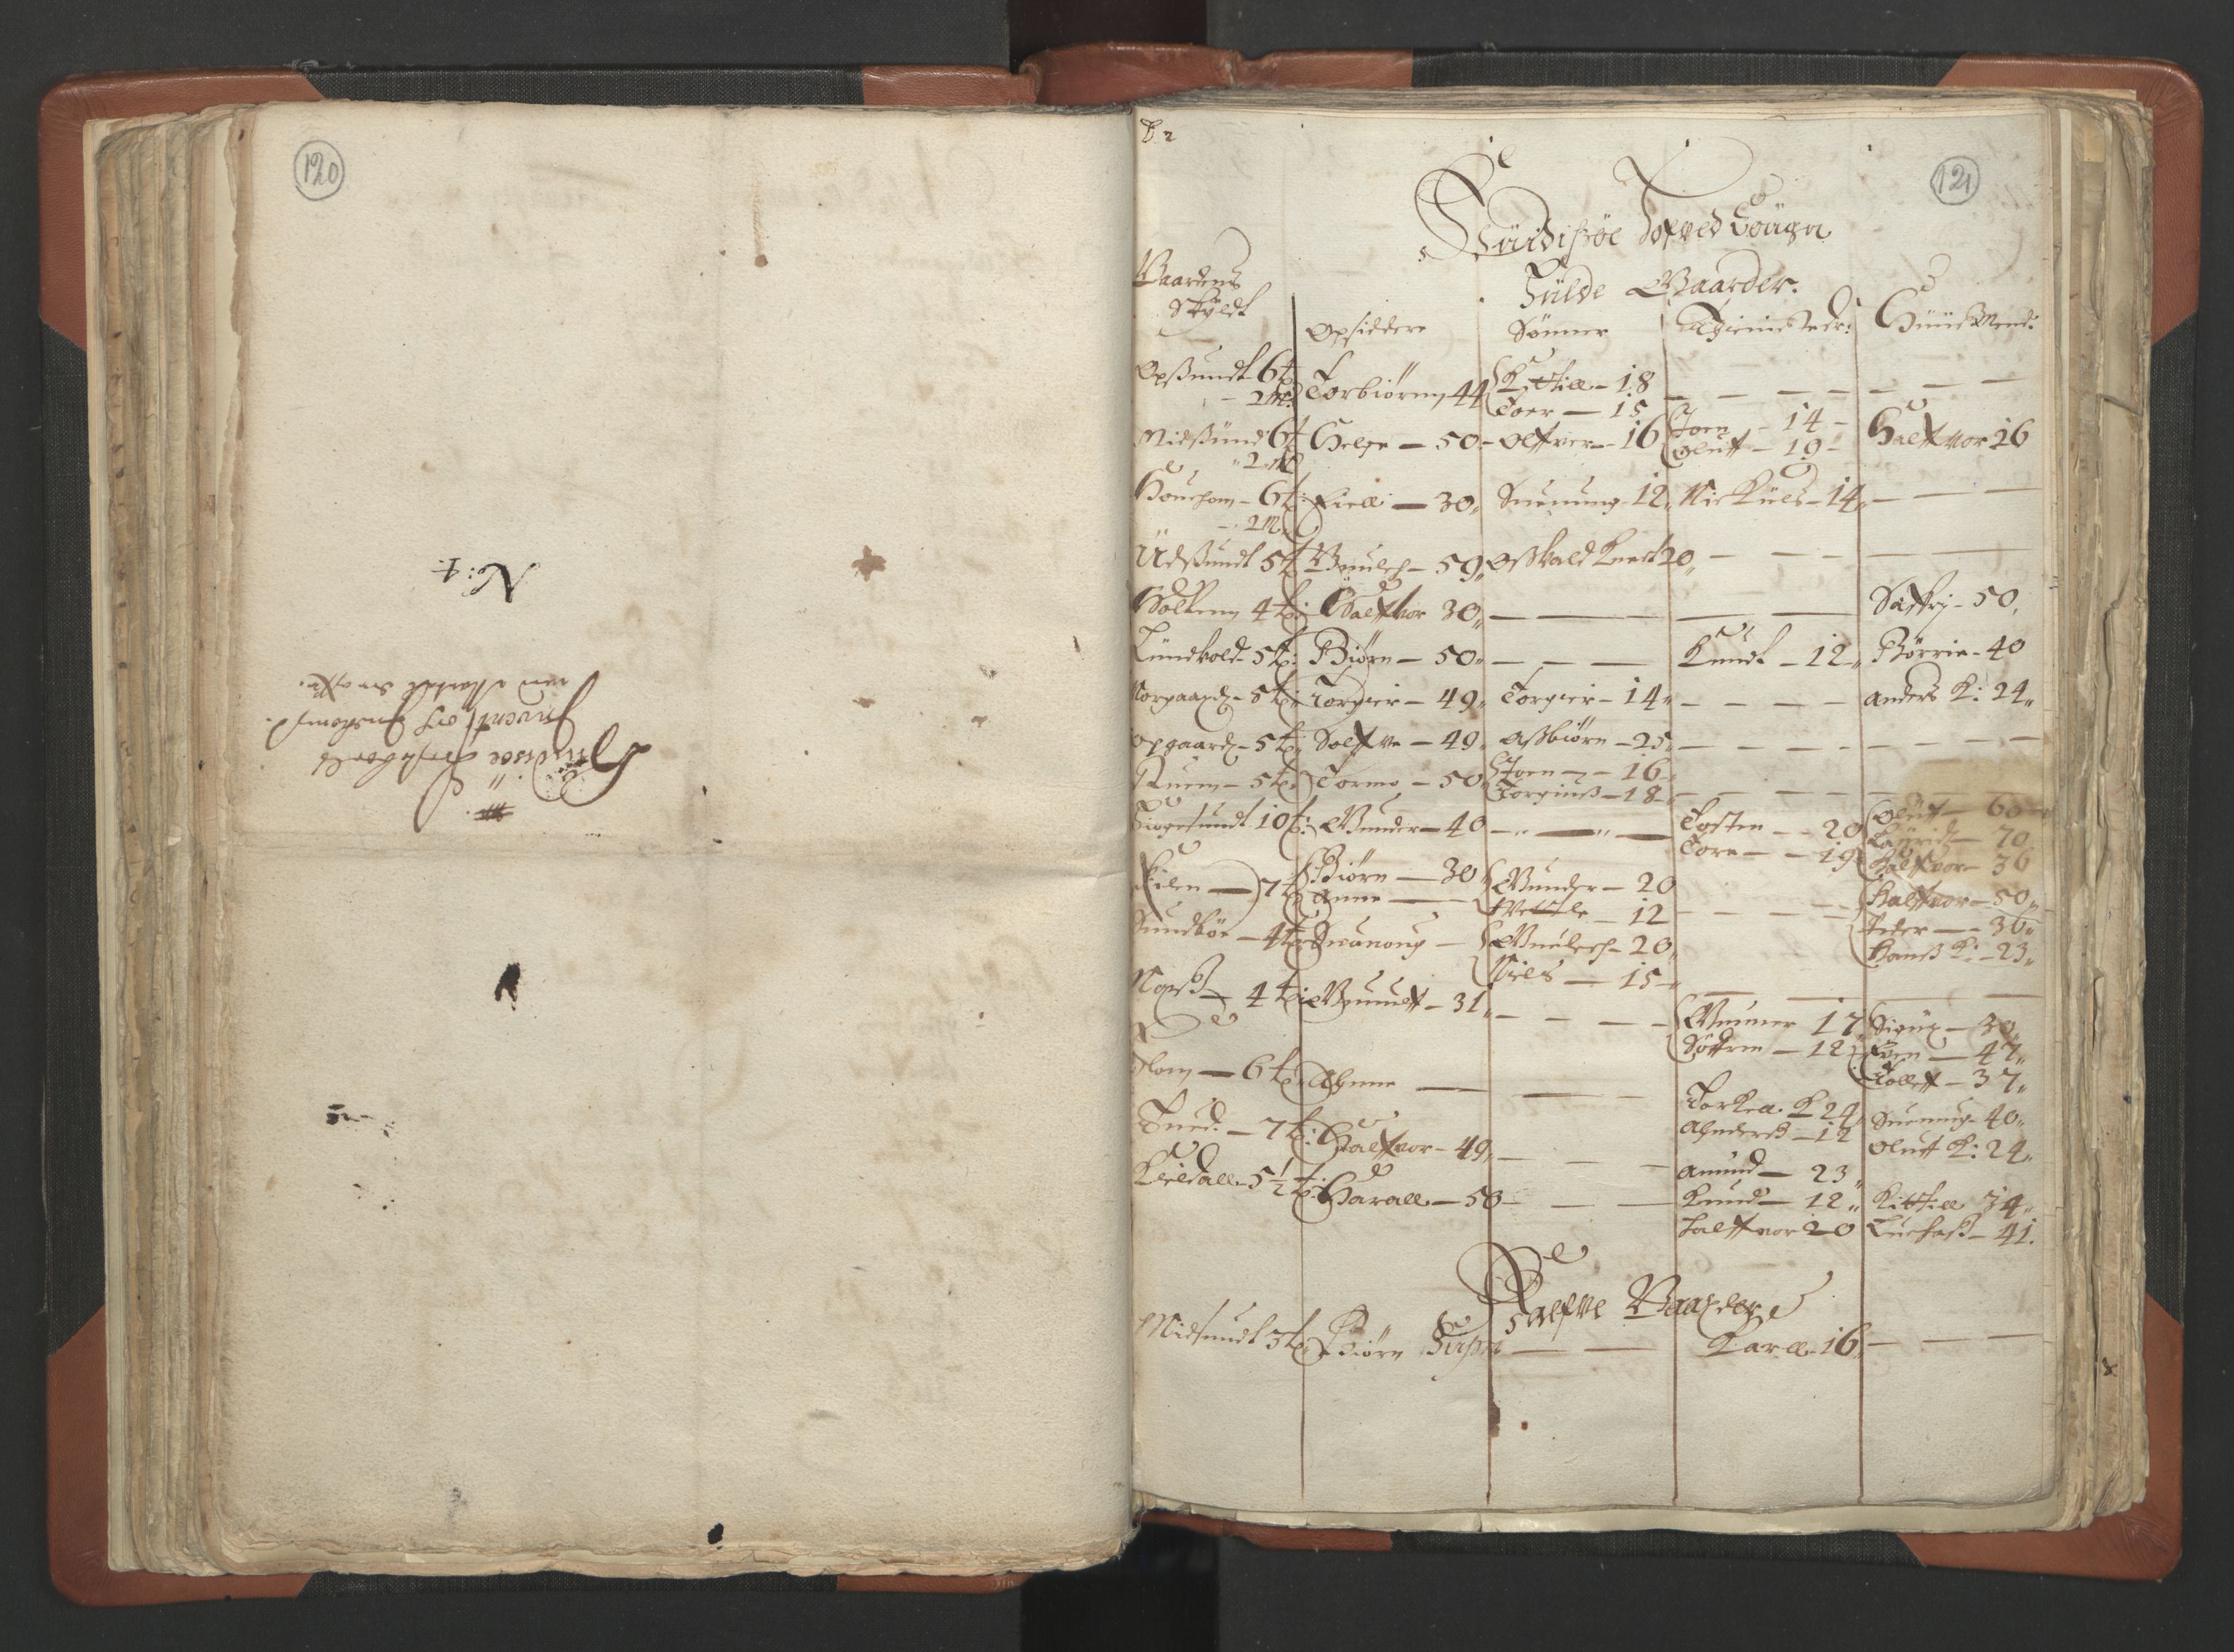 RA, Vicar's Census 1664-1666, no. 12: Øvre Telemark deanery, Nedre Telemark deanery and Bamble deanery, 1664-1666, p. 120-121